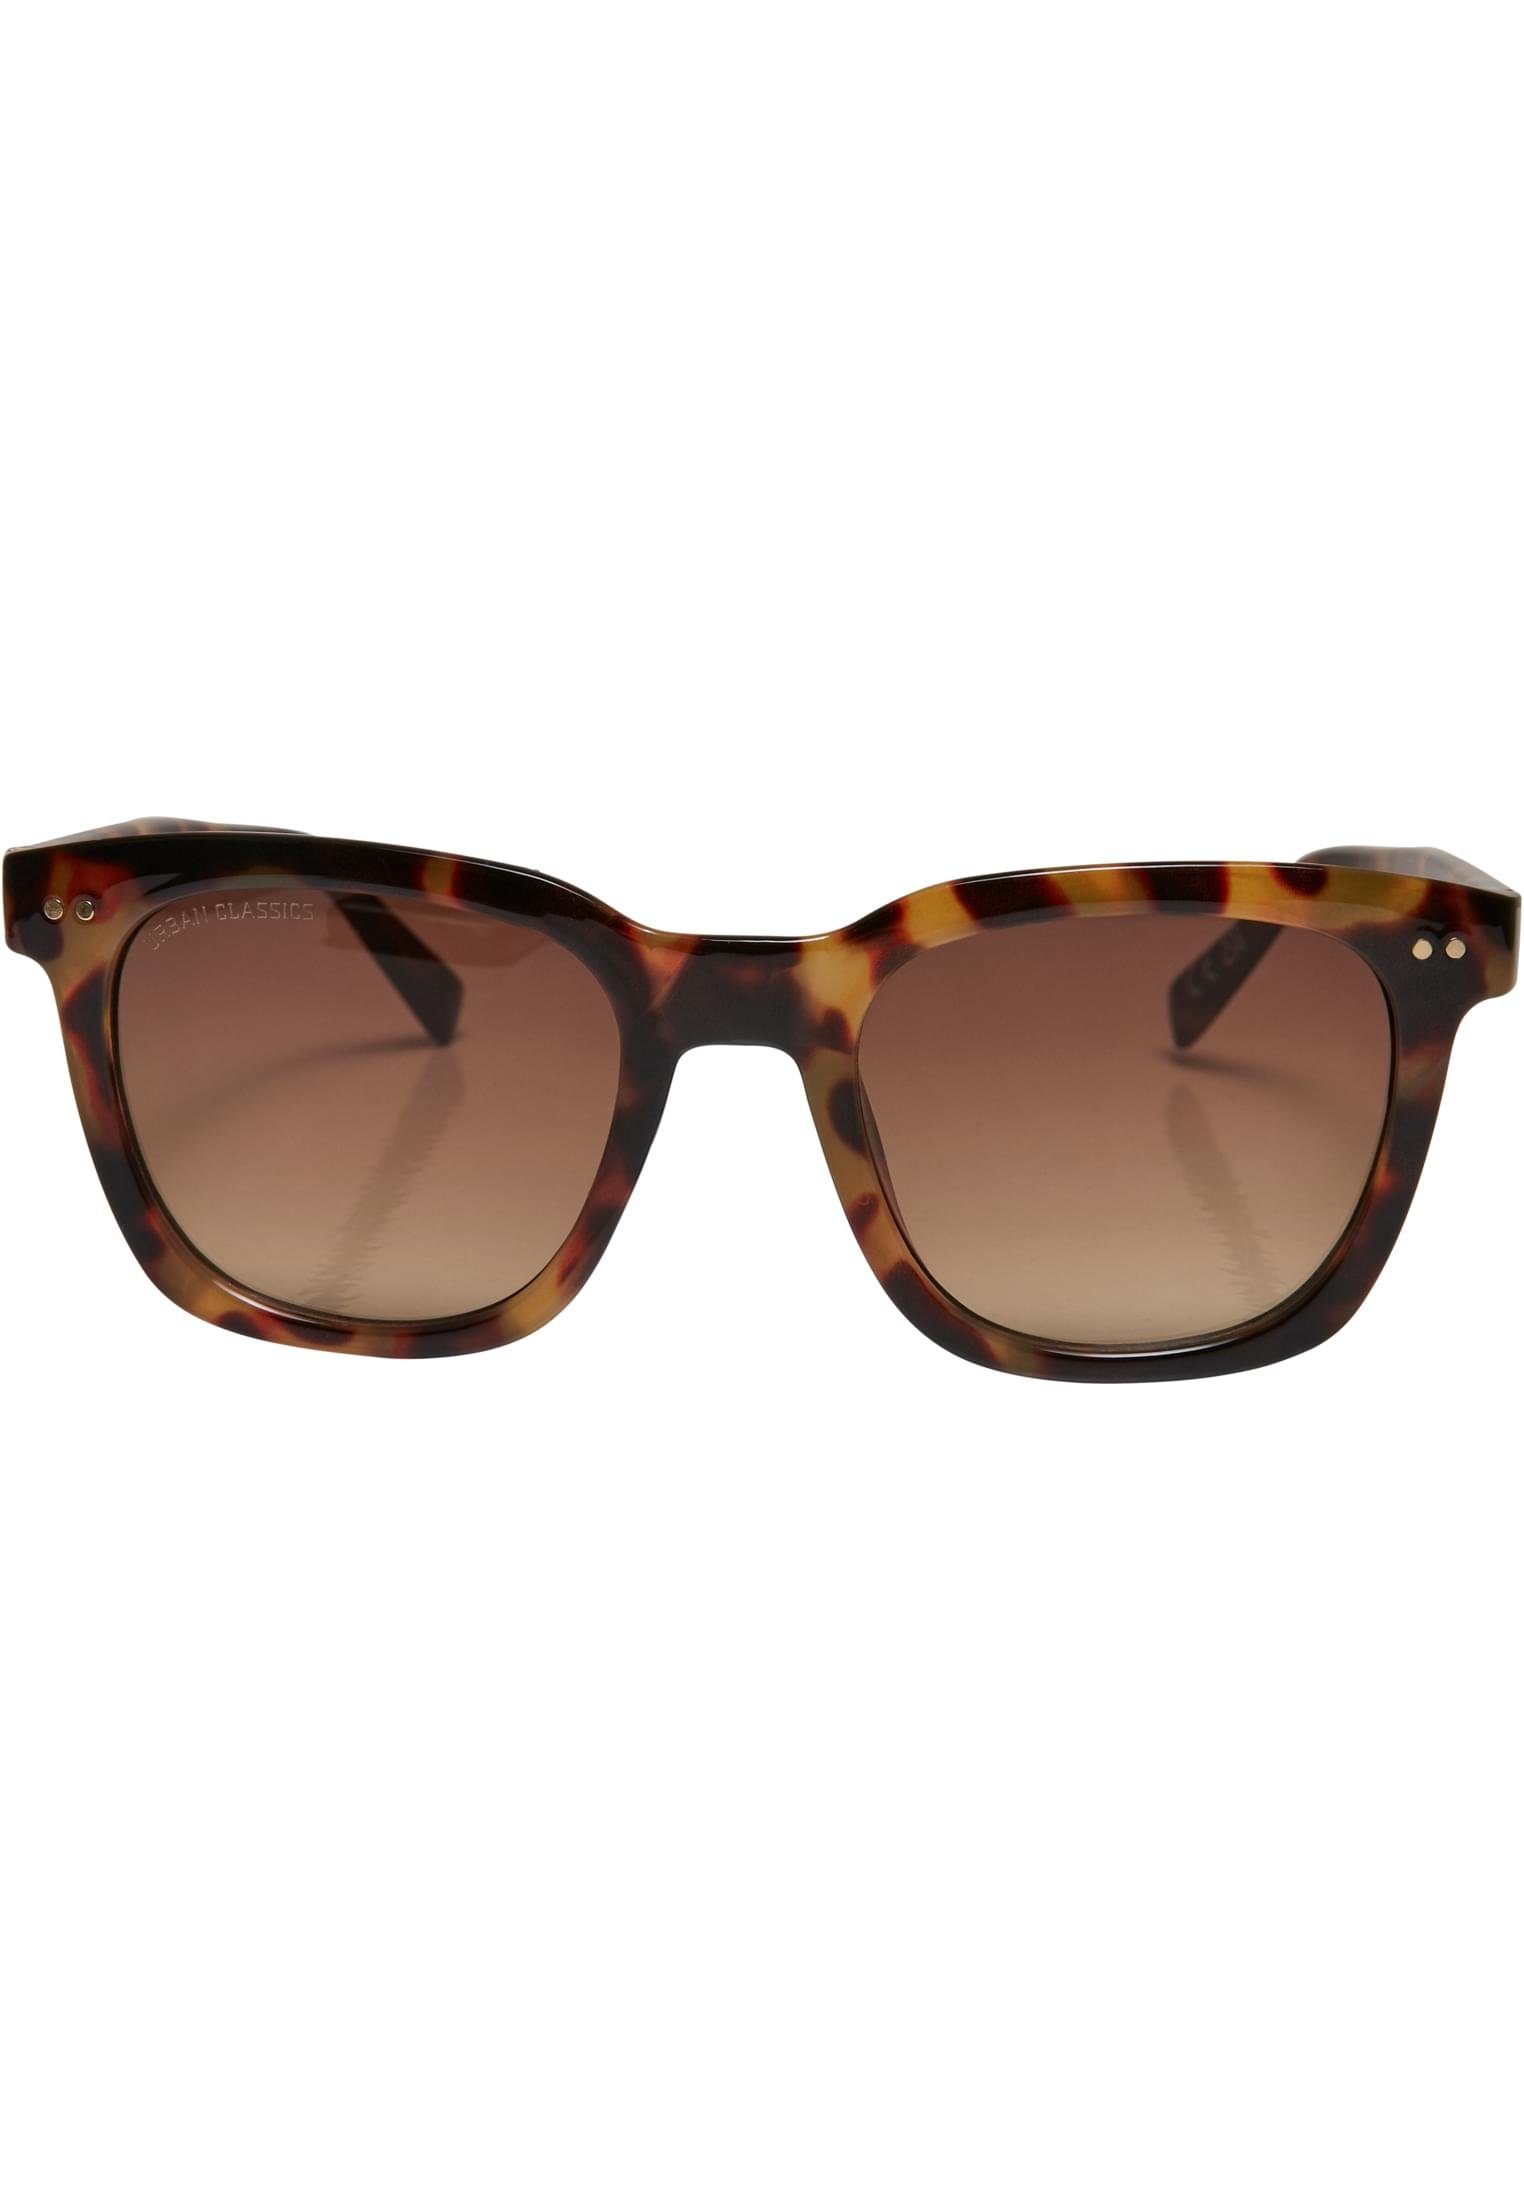 Naples, getragen Accessoire Sonnenbrille Unisex als URBAN werden modisches Sunglasses CLASSICS Kann